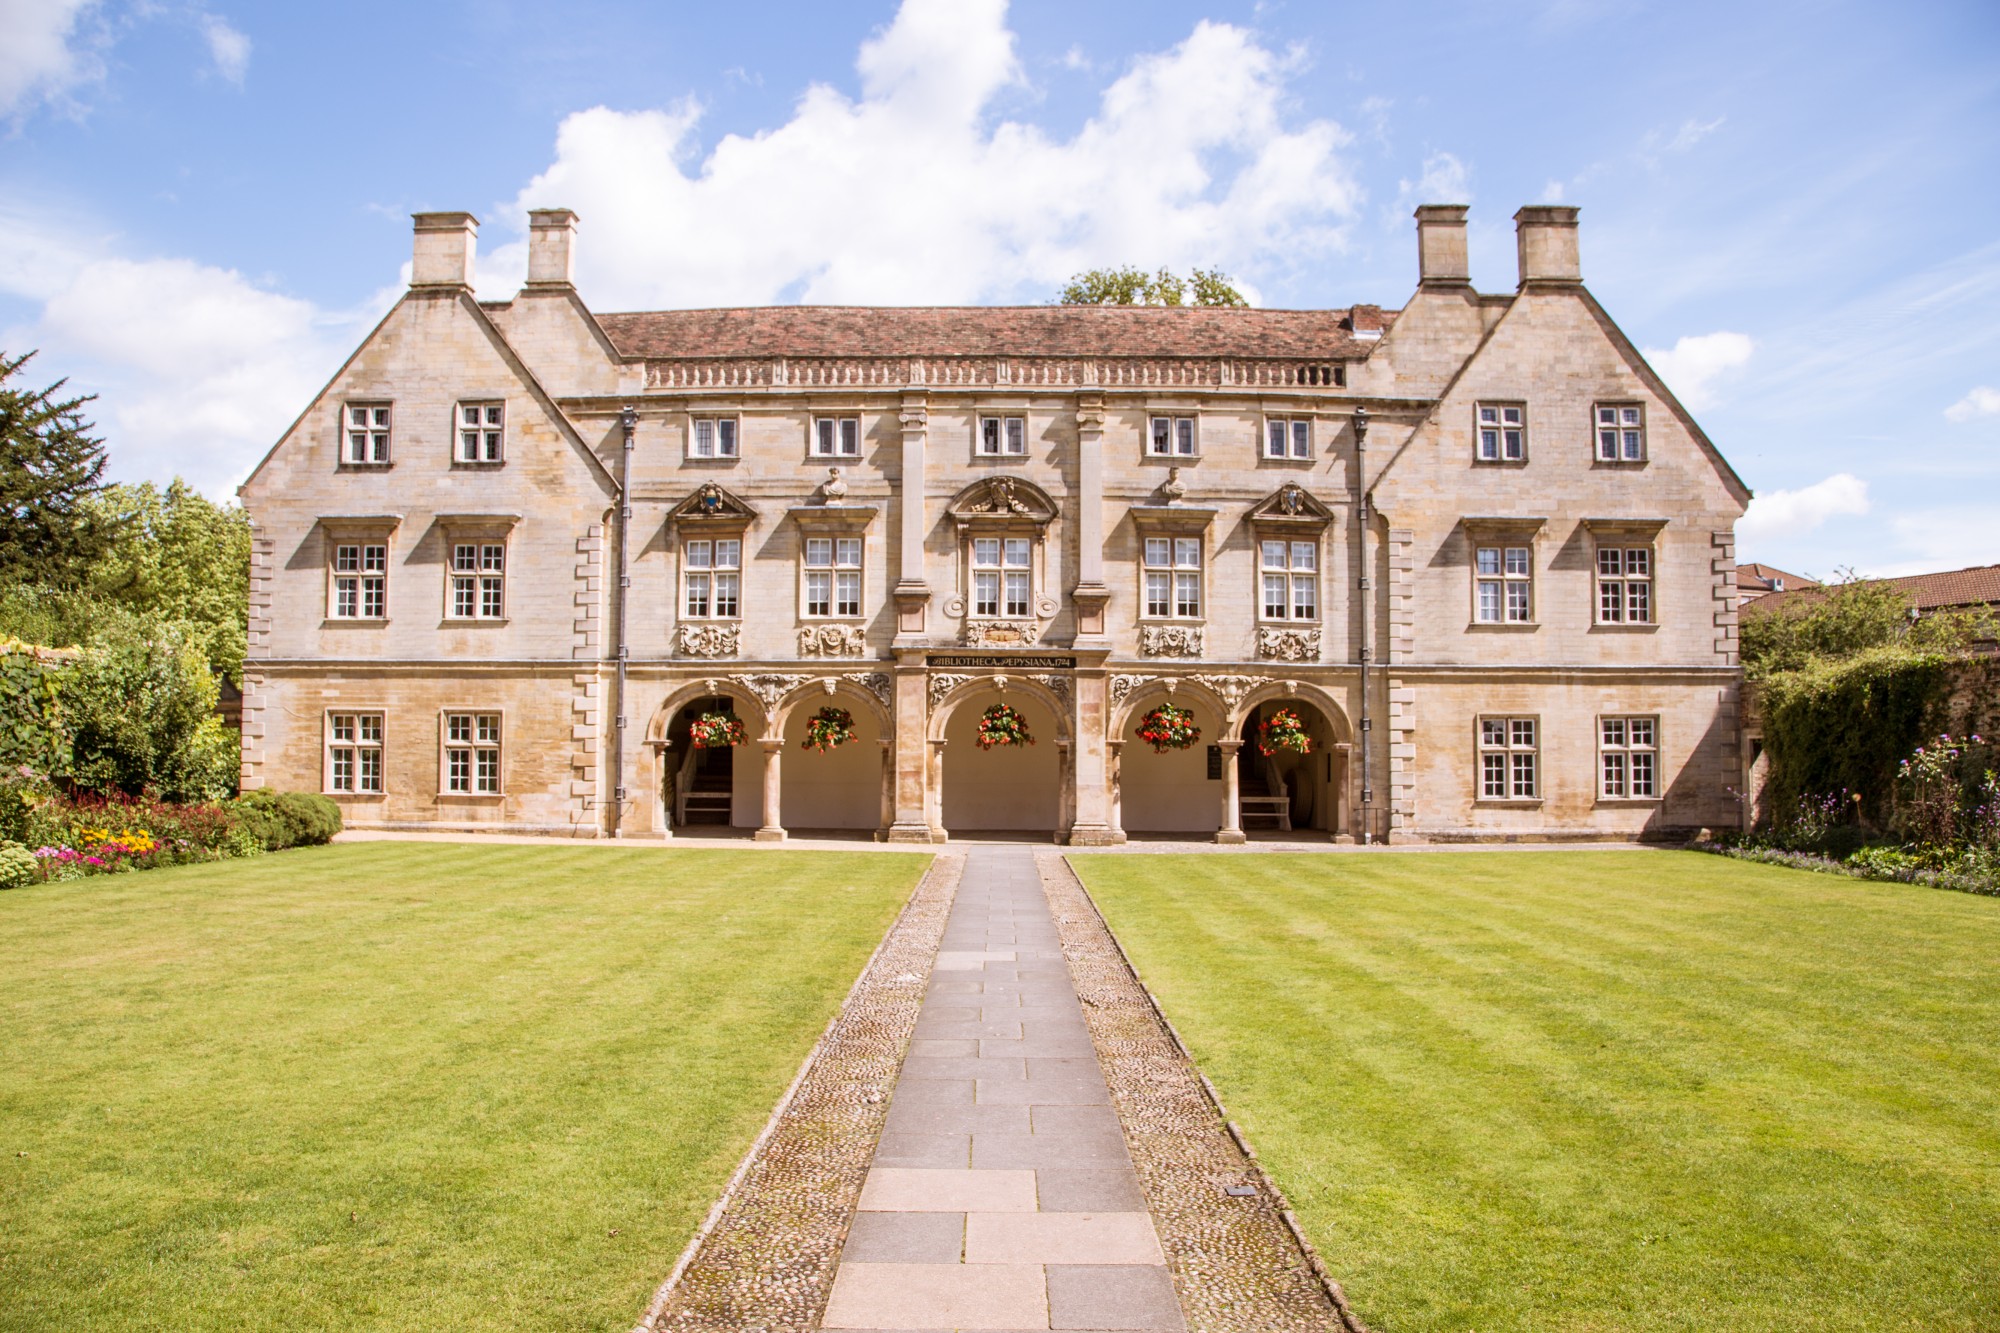 Magdalene College, Cambridge University